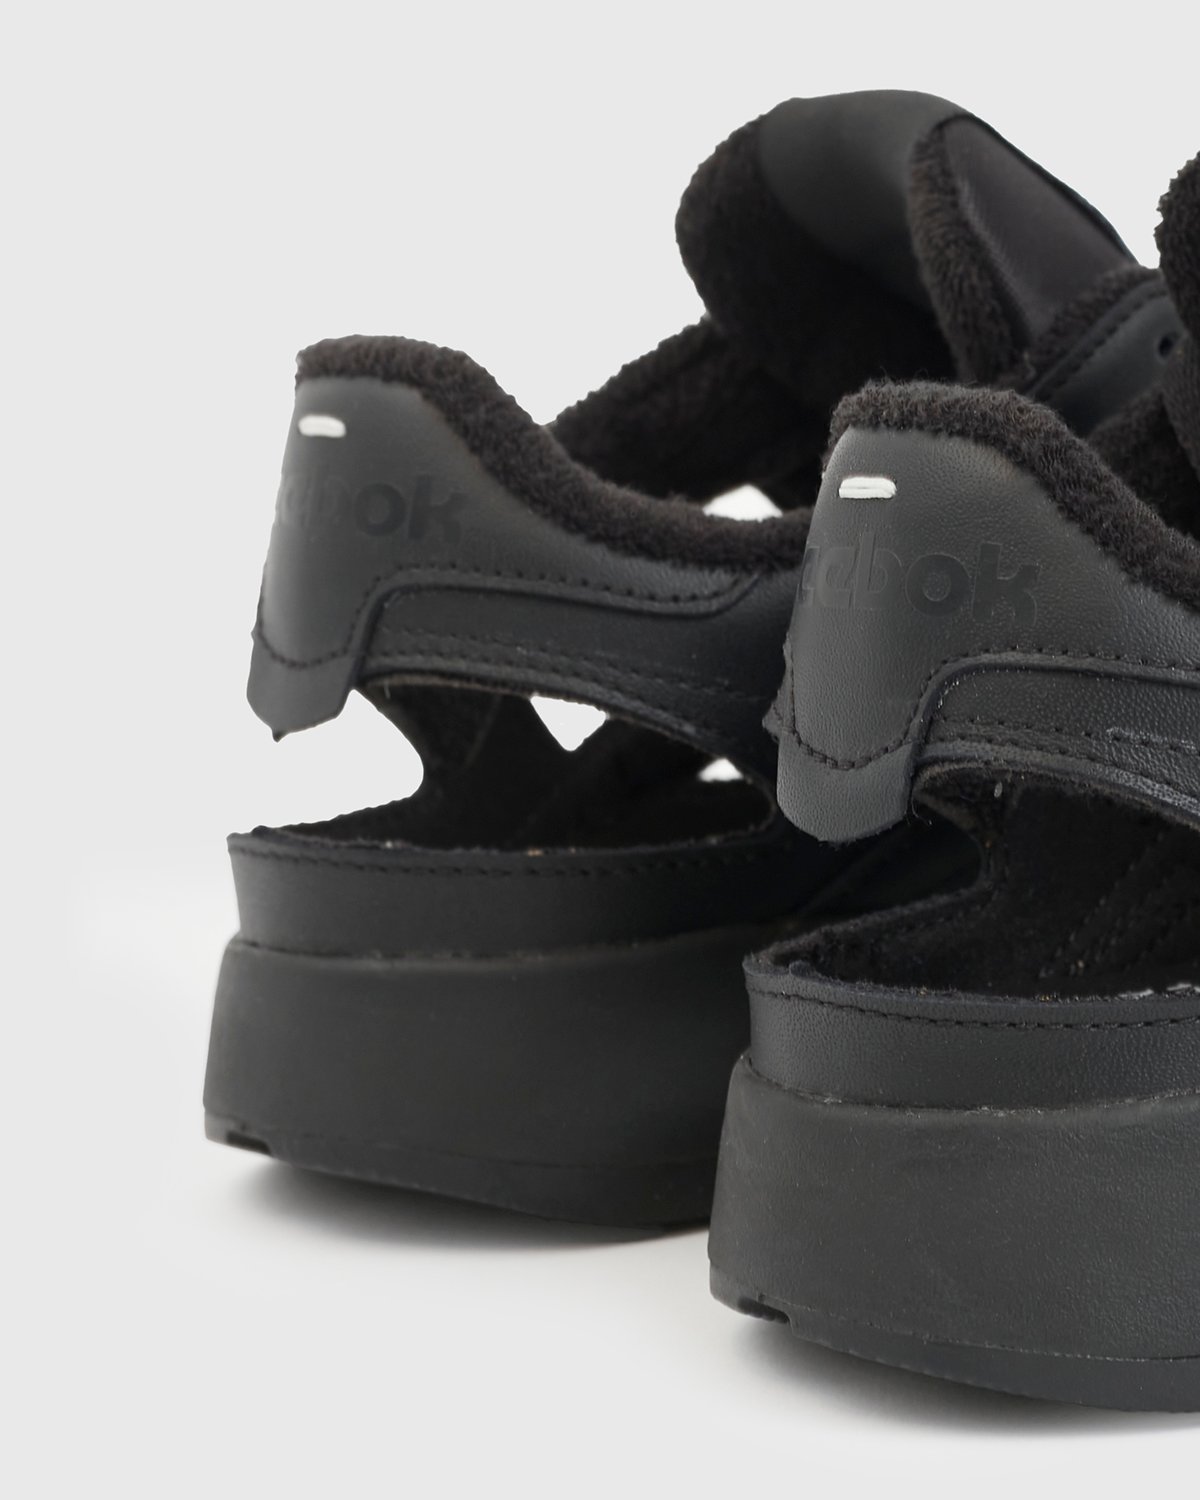 Maison Margiela x Reebok - Classic Leather Tabi Low Black - Footwear - Black - Image 5